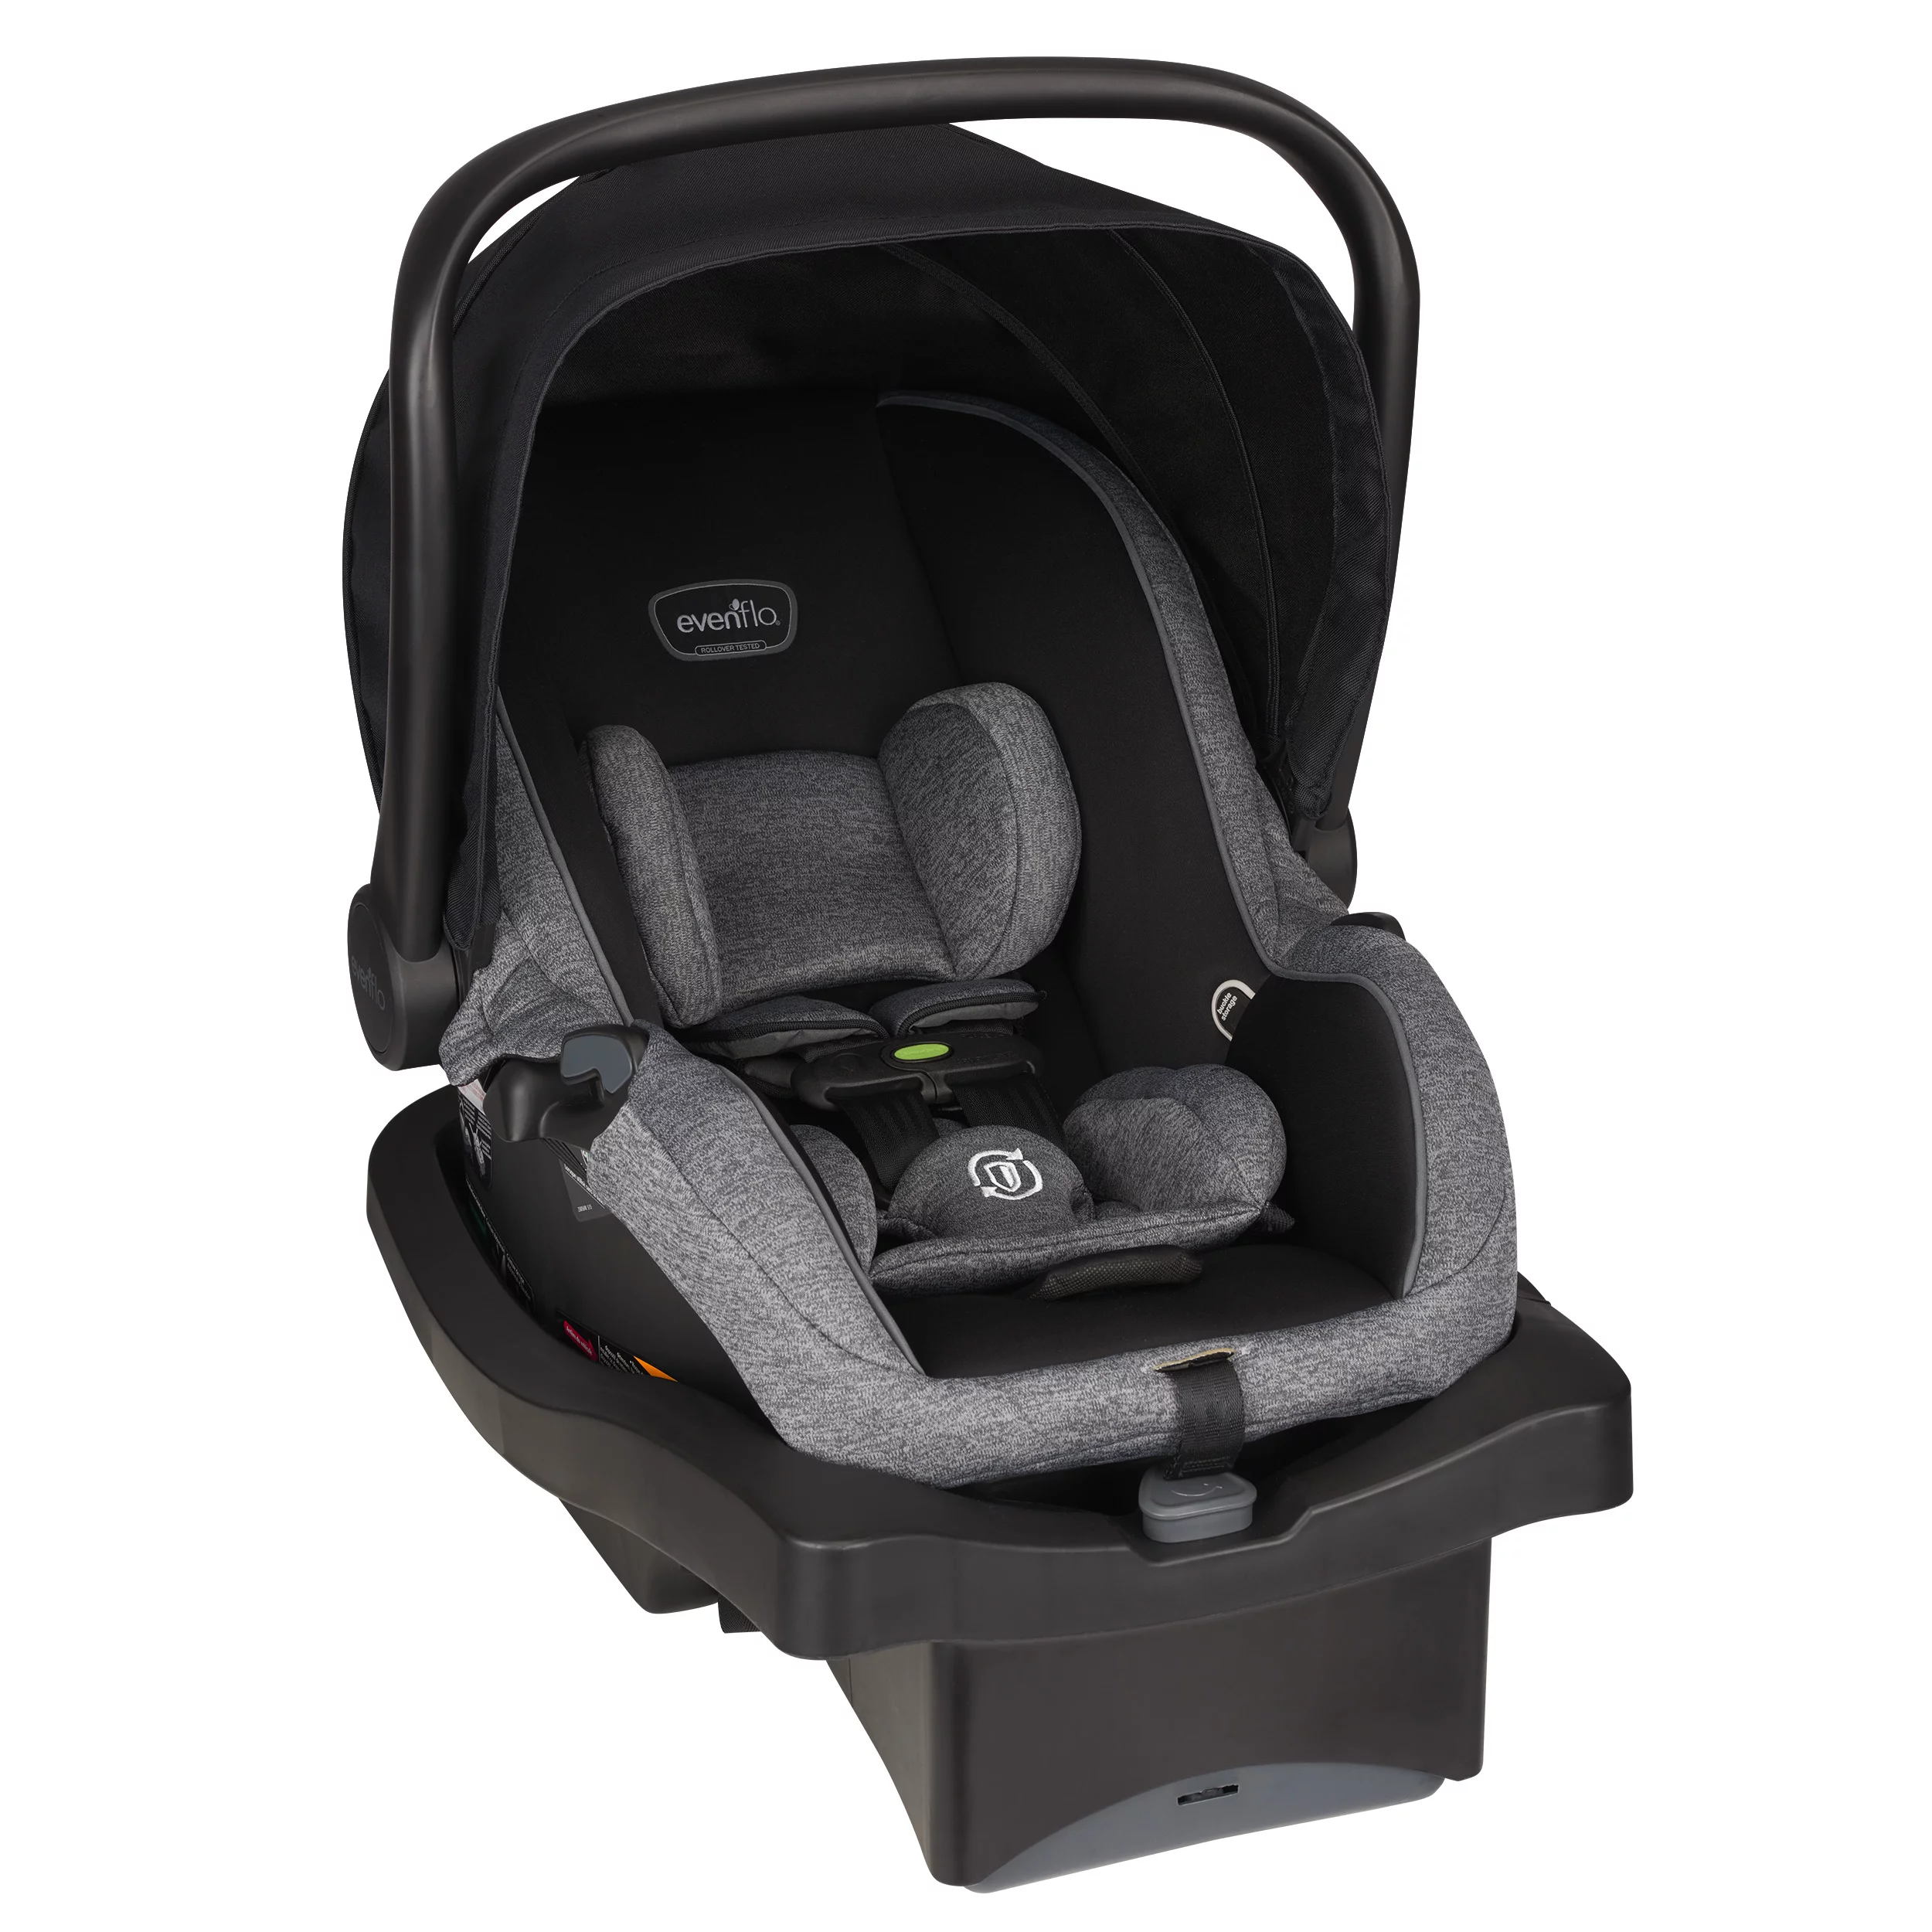 Everillo Advanced SensorSafe LiteMax Infant Car Seat